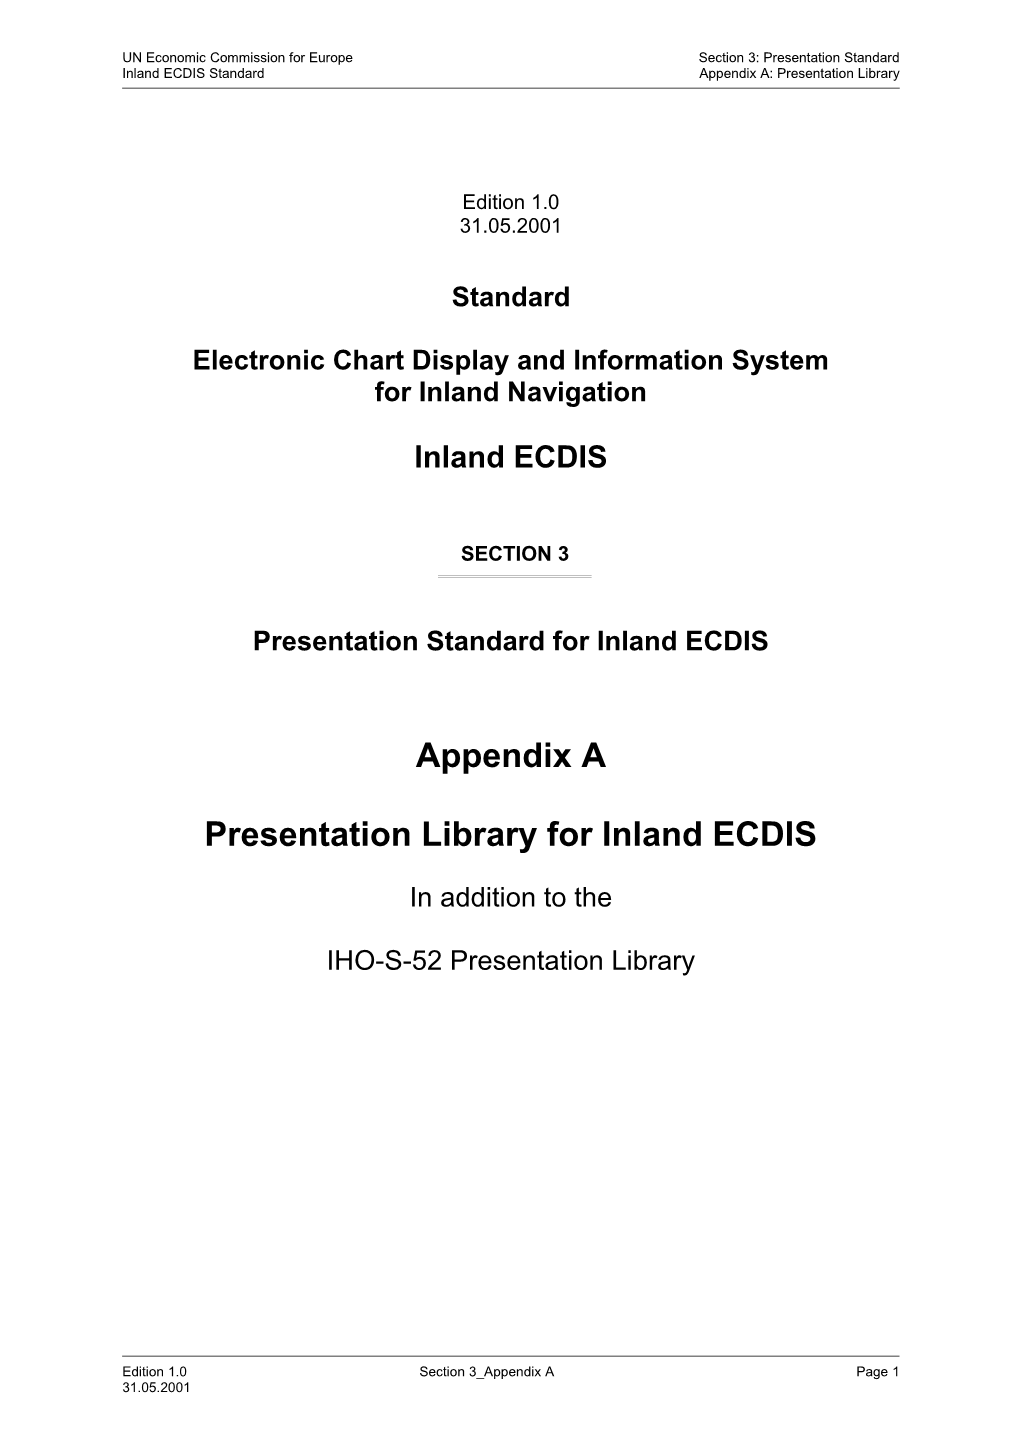 Section 3: Presentation Standard; Appendix A: Presentation Library